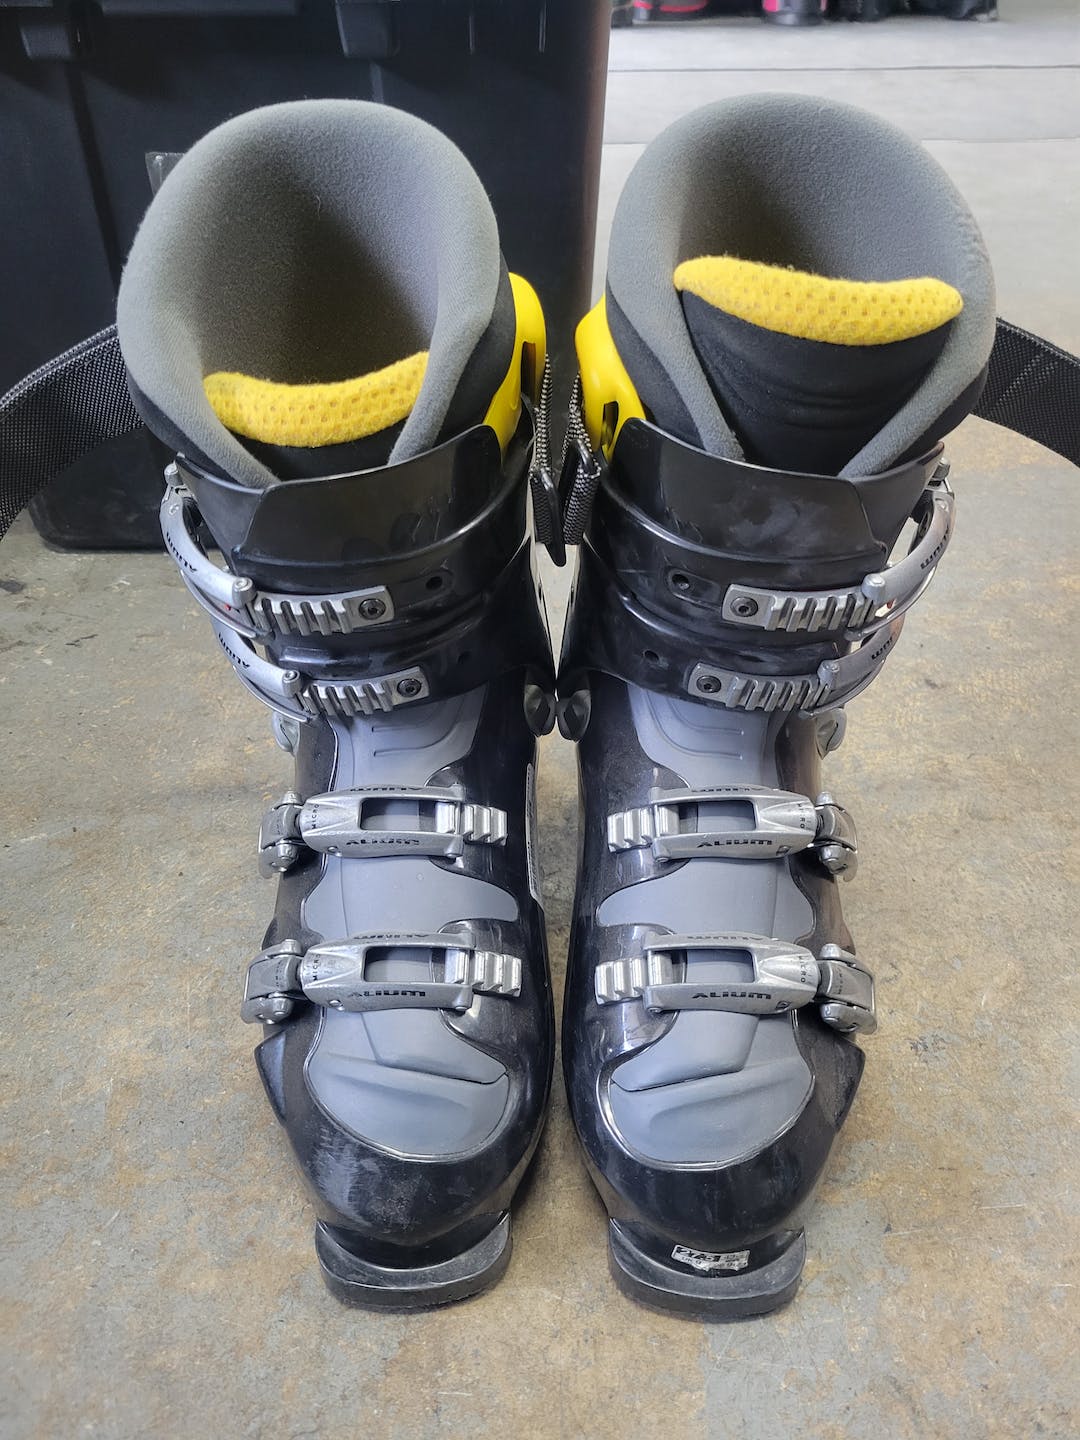 Tecnica The Agent Non-Tech AT Ski Boots, Mondo 27.5 Men's 9.5, No Inso –  The Extra Mile Outdoor Gear & Bike